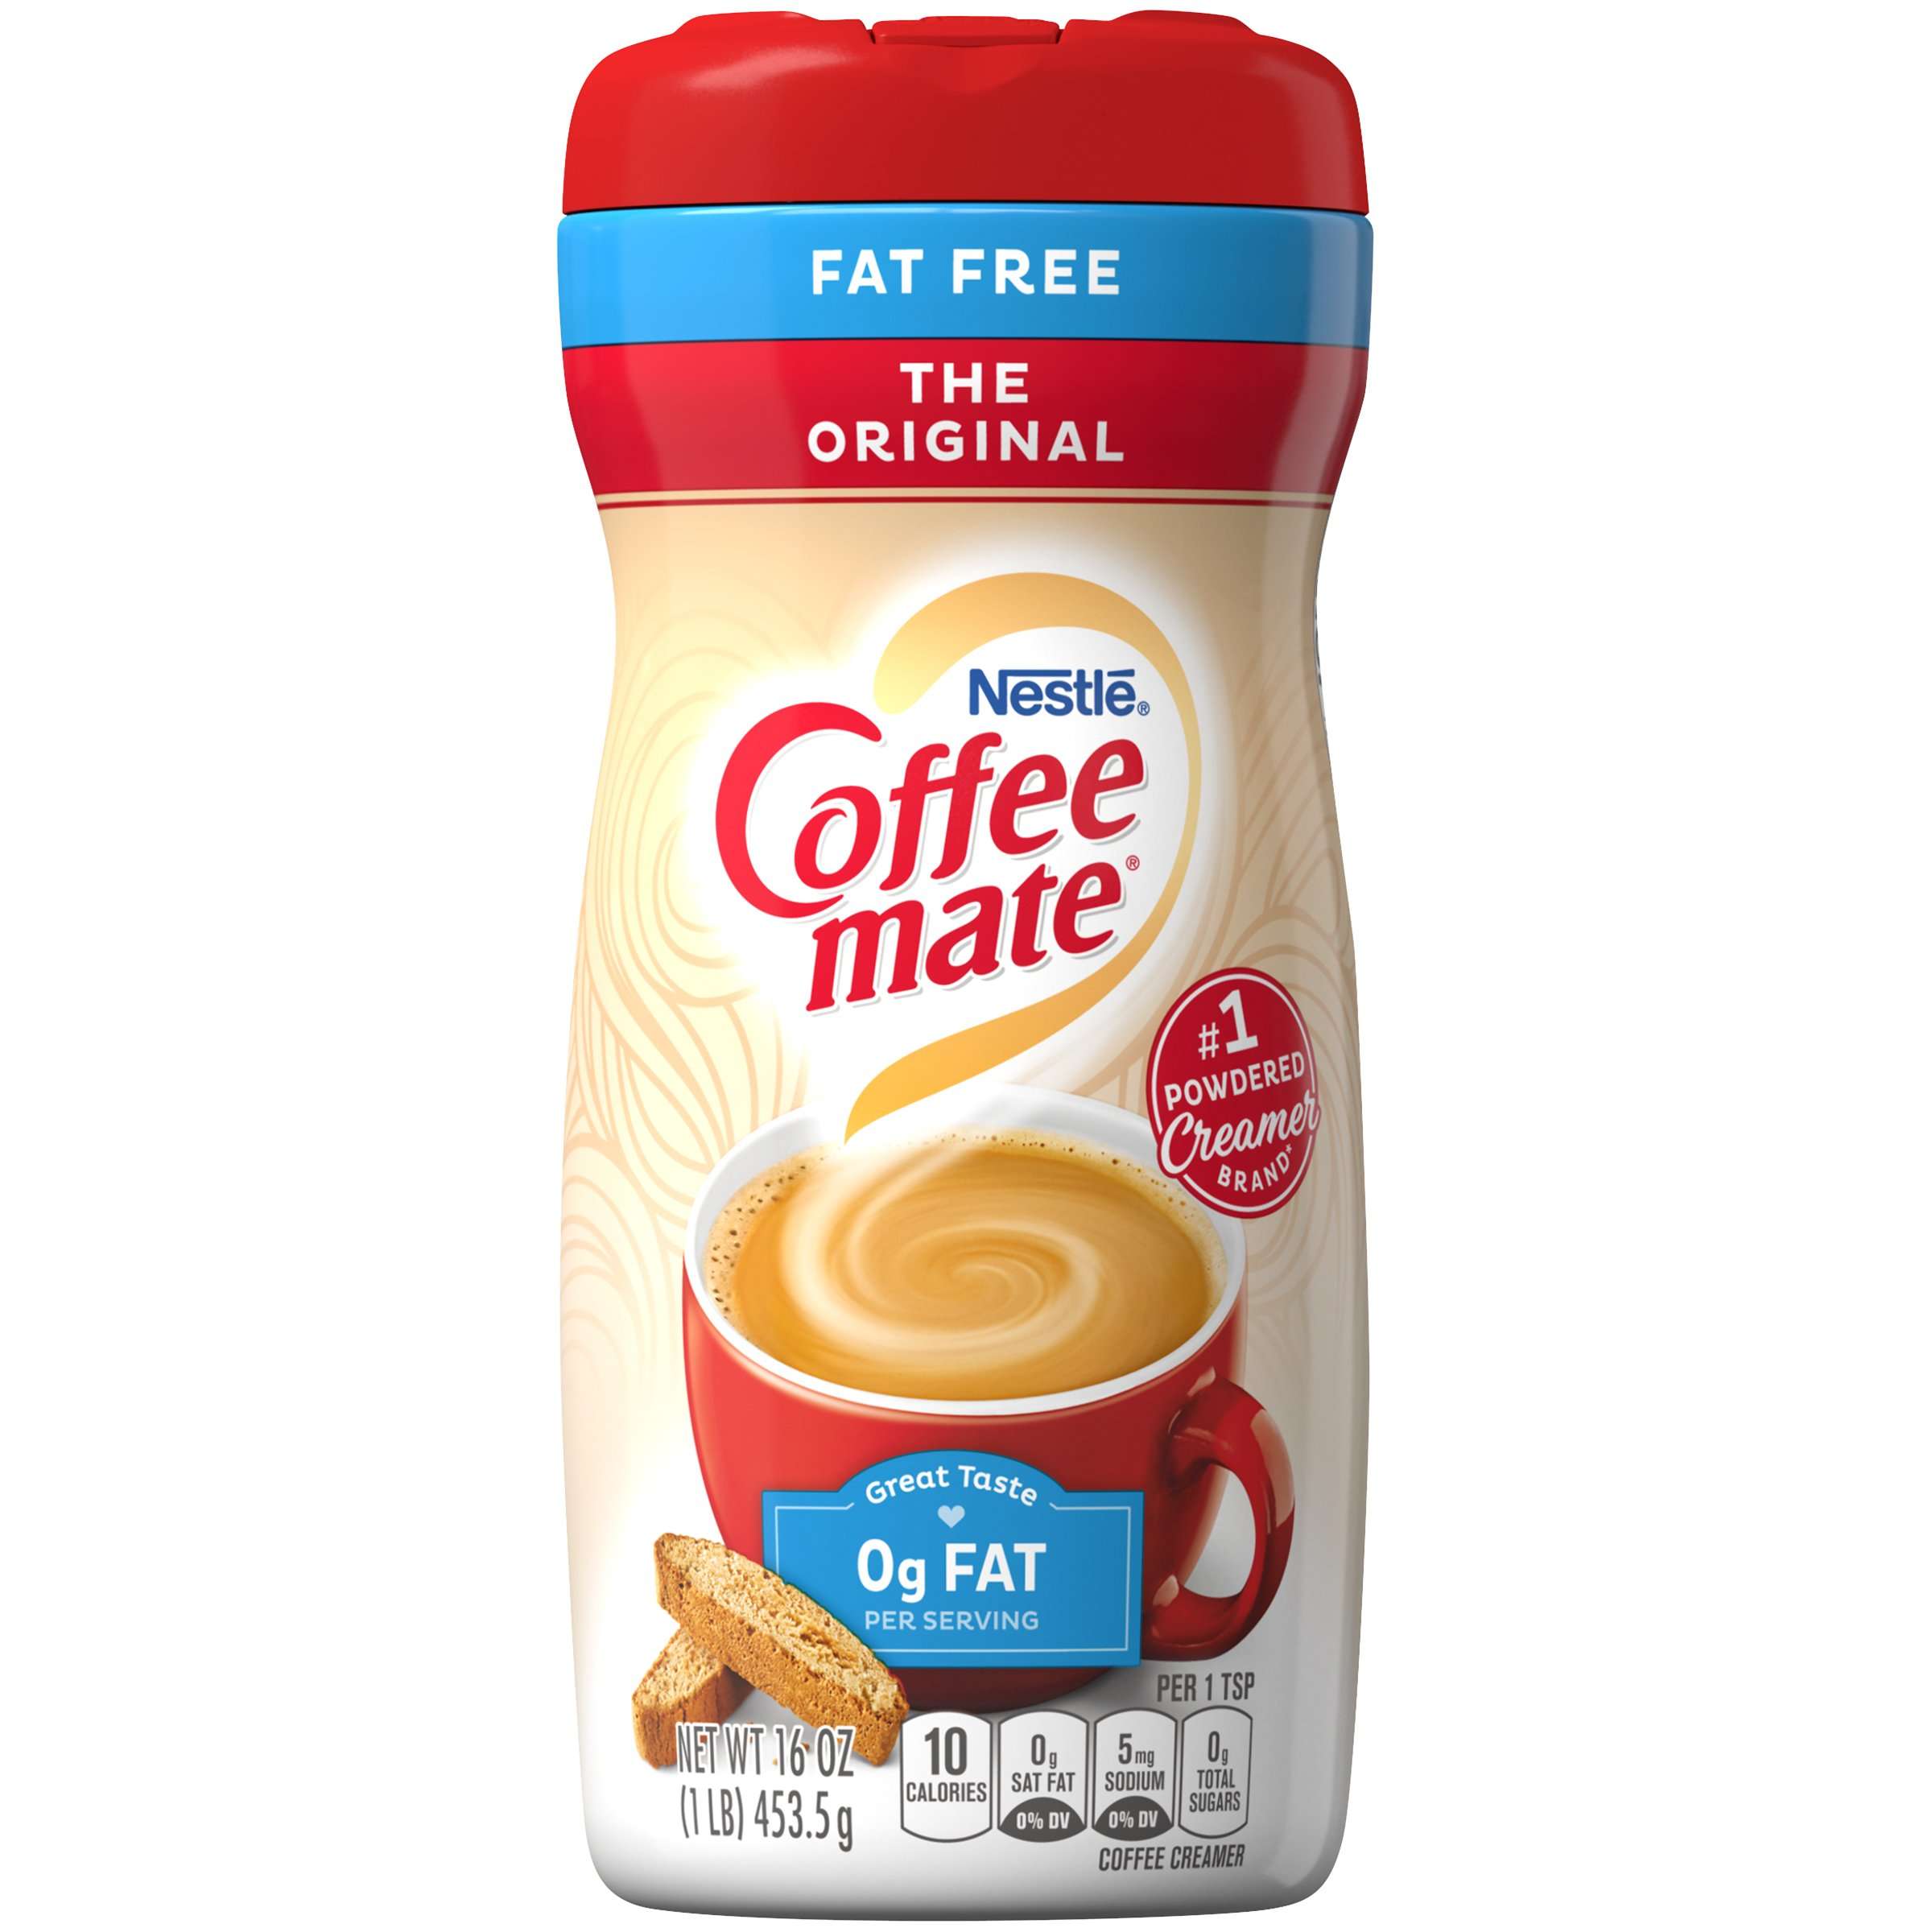 COFFEE MATE Fat Free The Original Powder Coffee Creamer ...